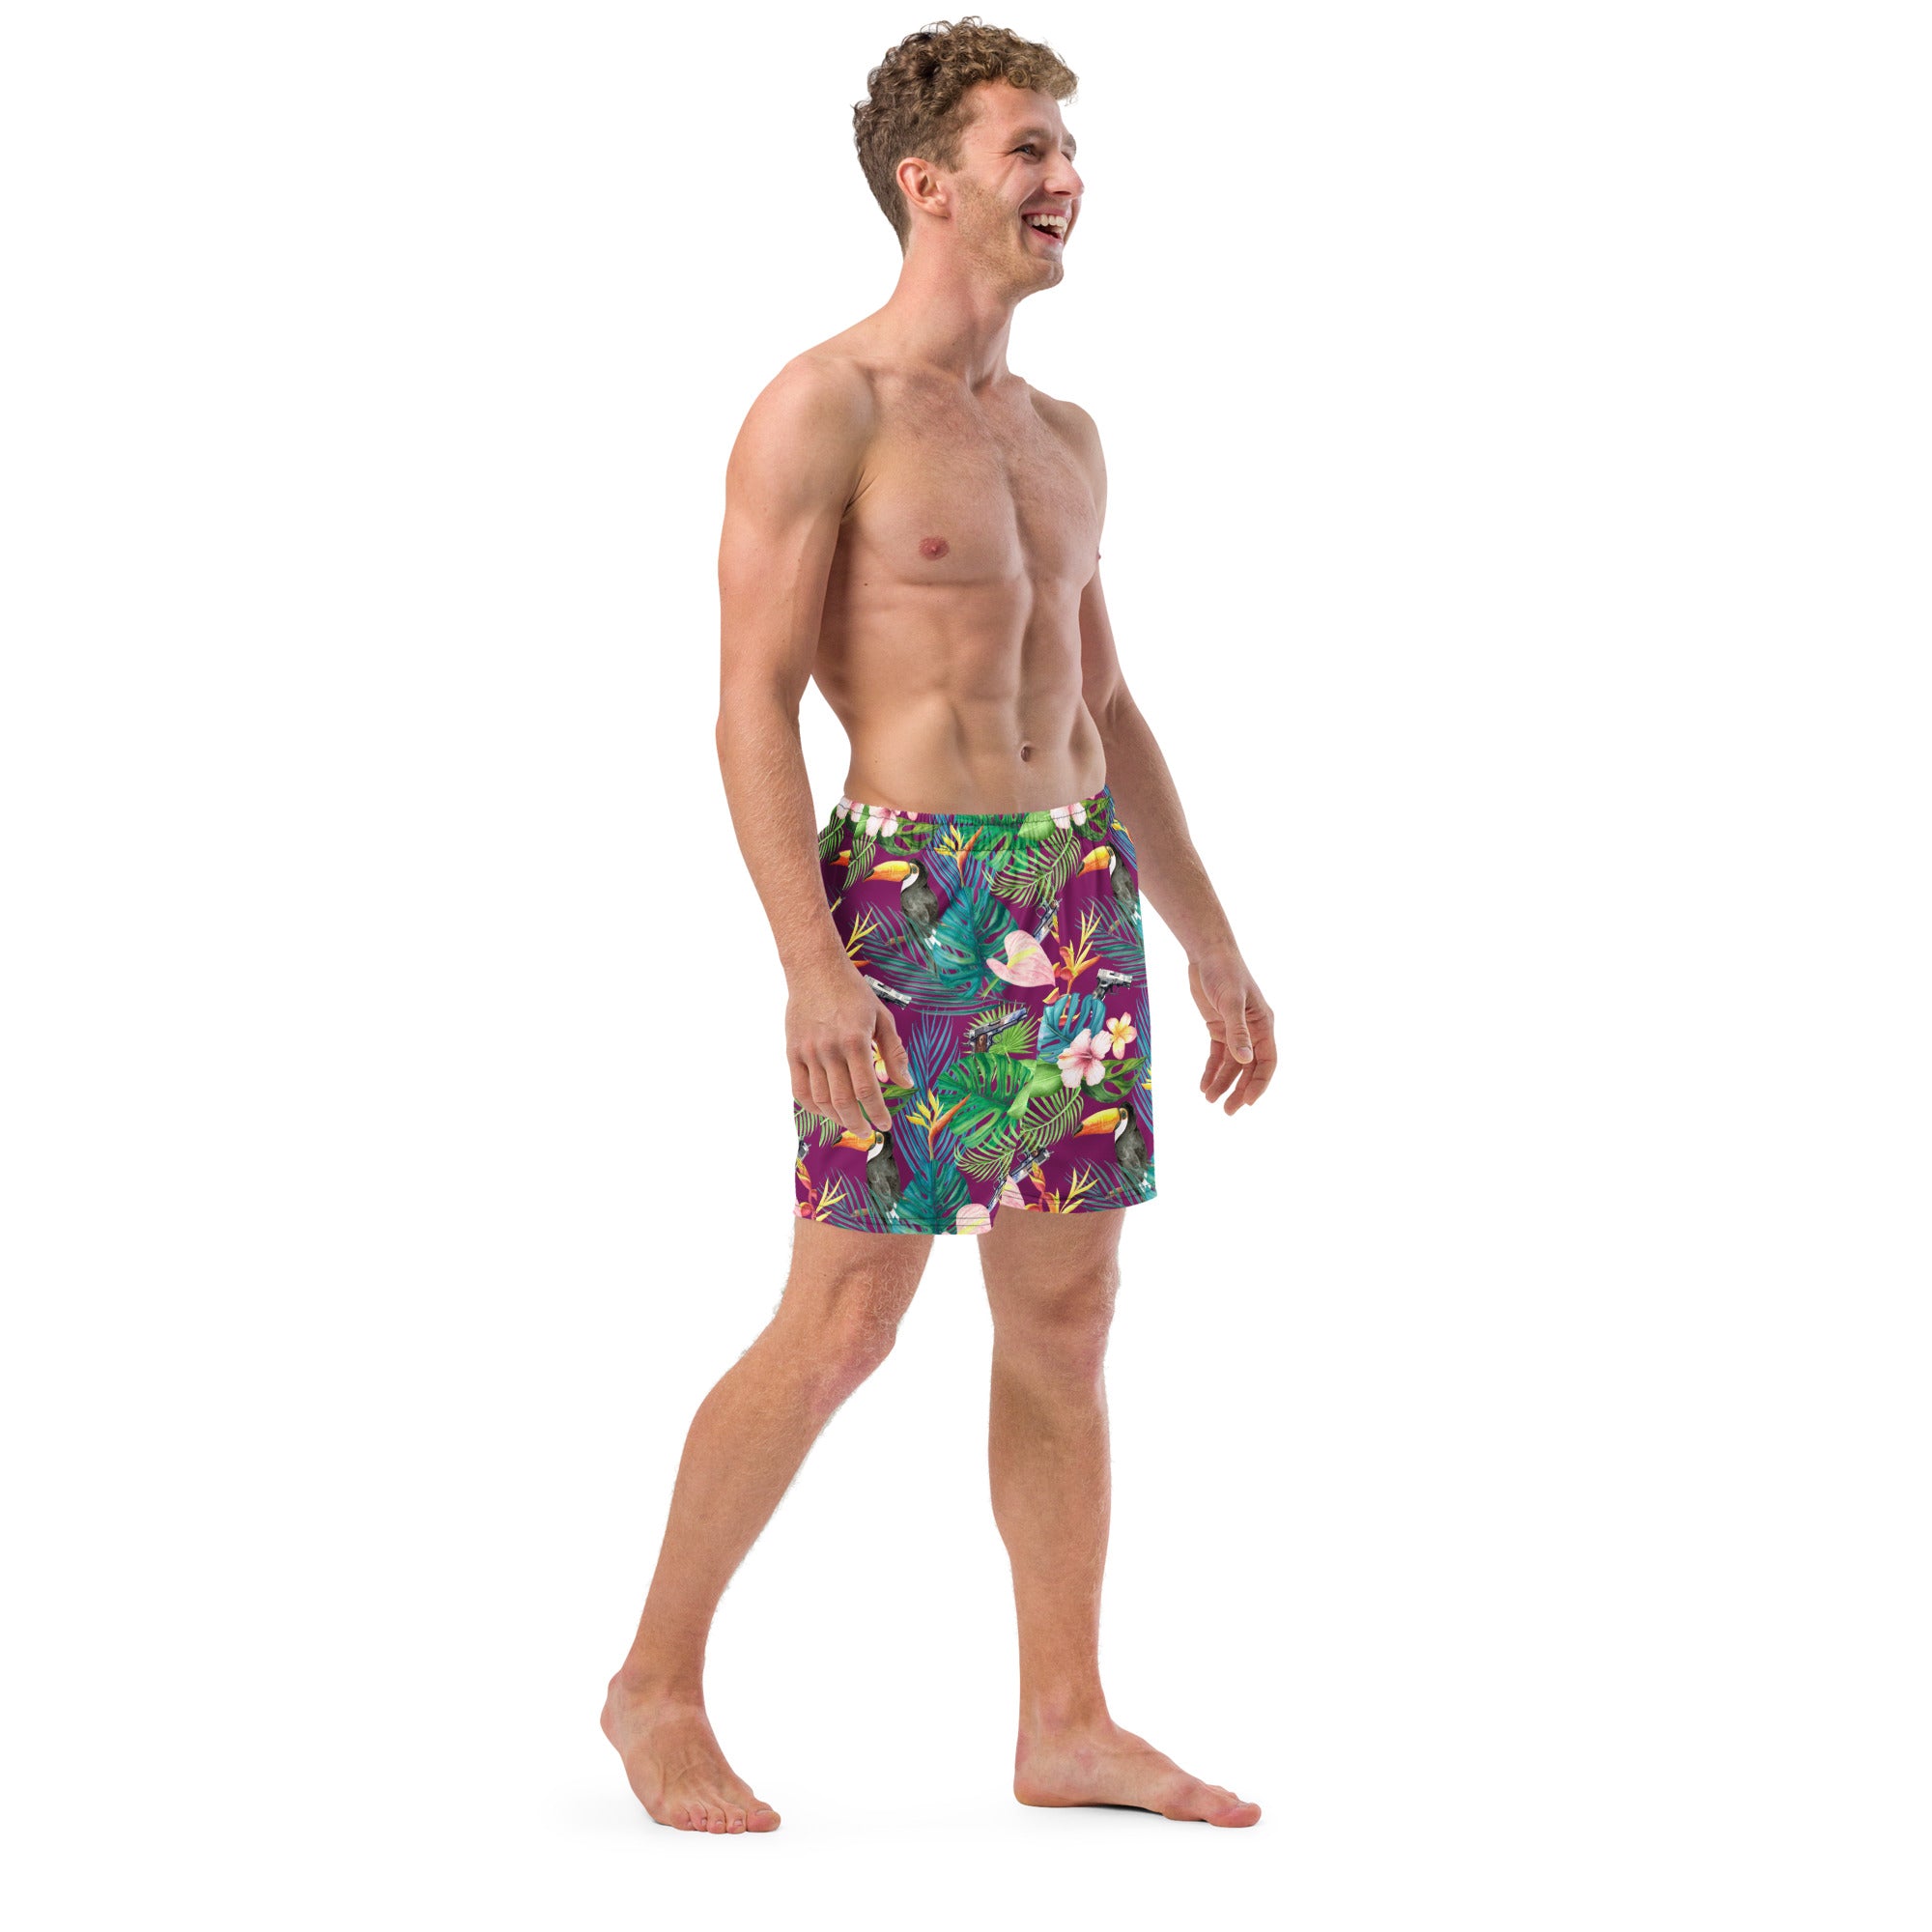 Hibiscus Bang Bang Sunset Hawaiian Men's swim trunks